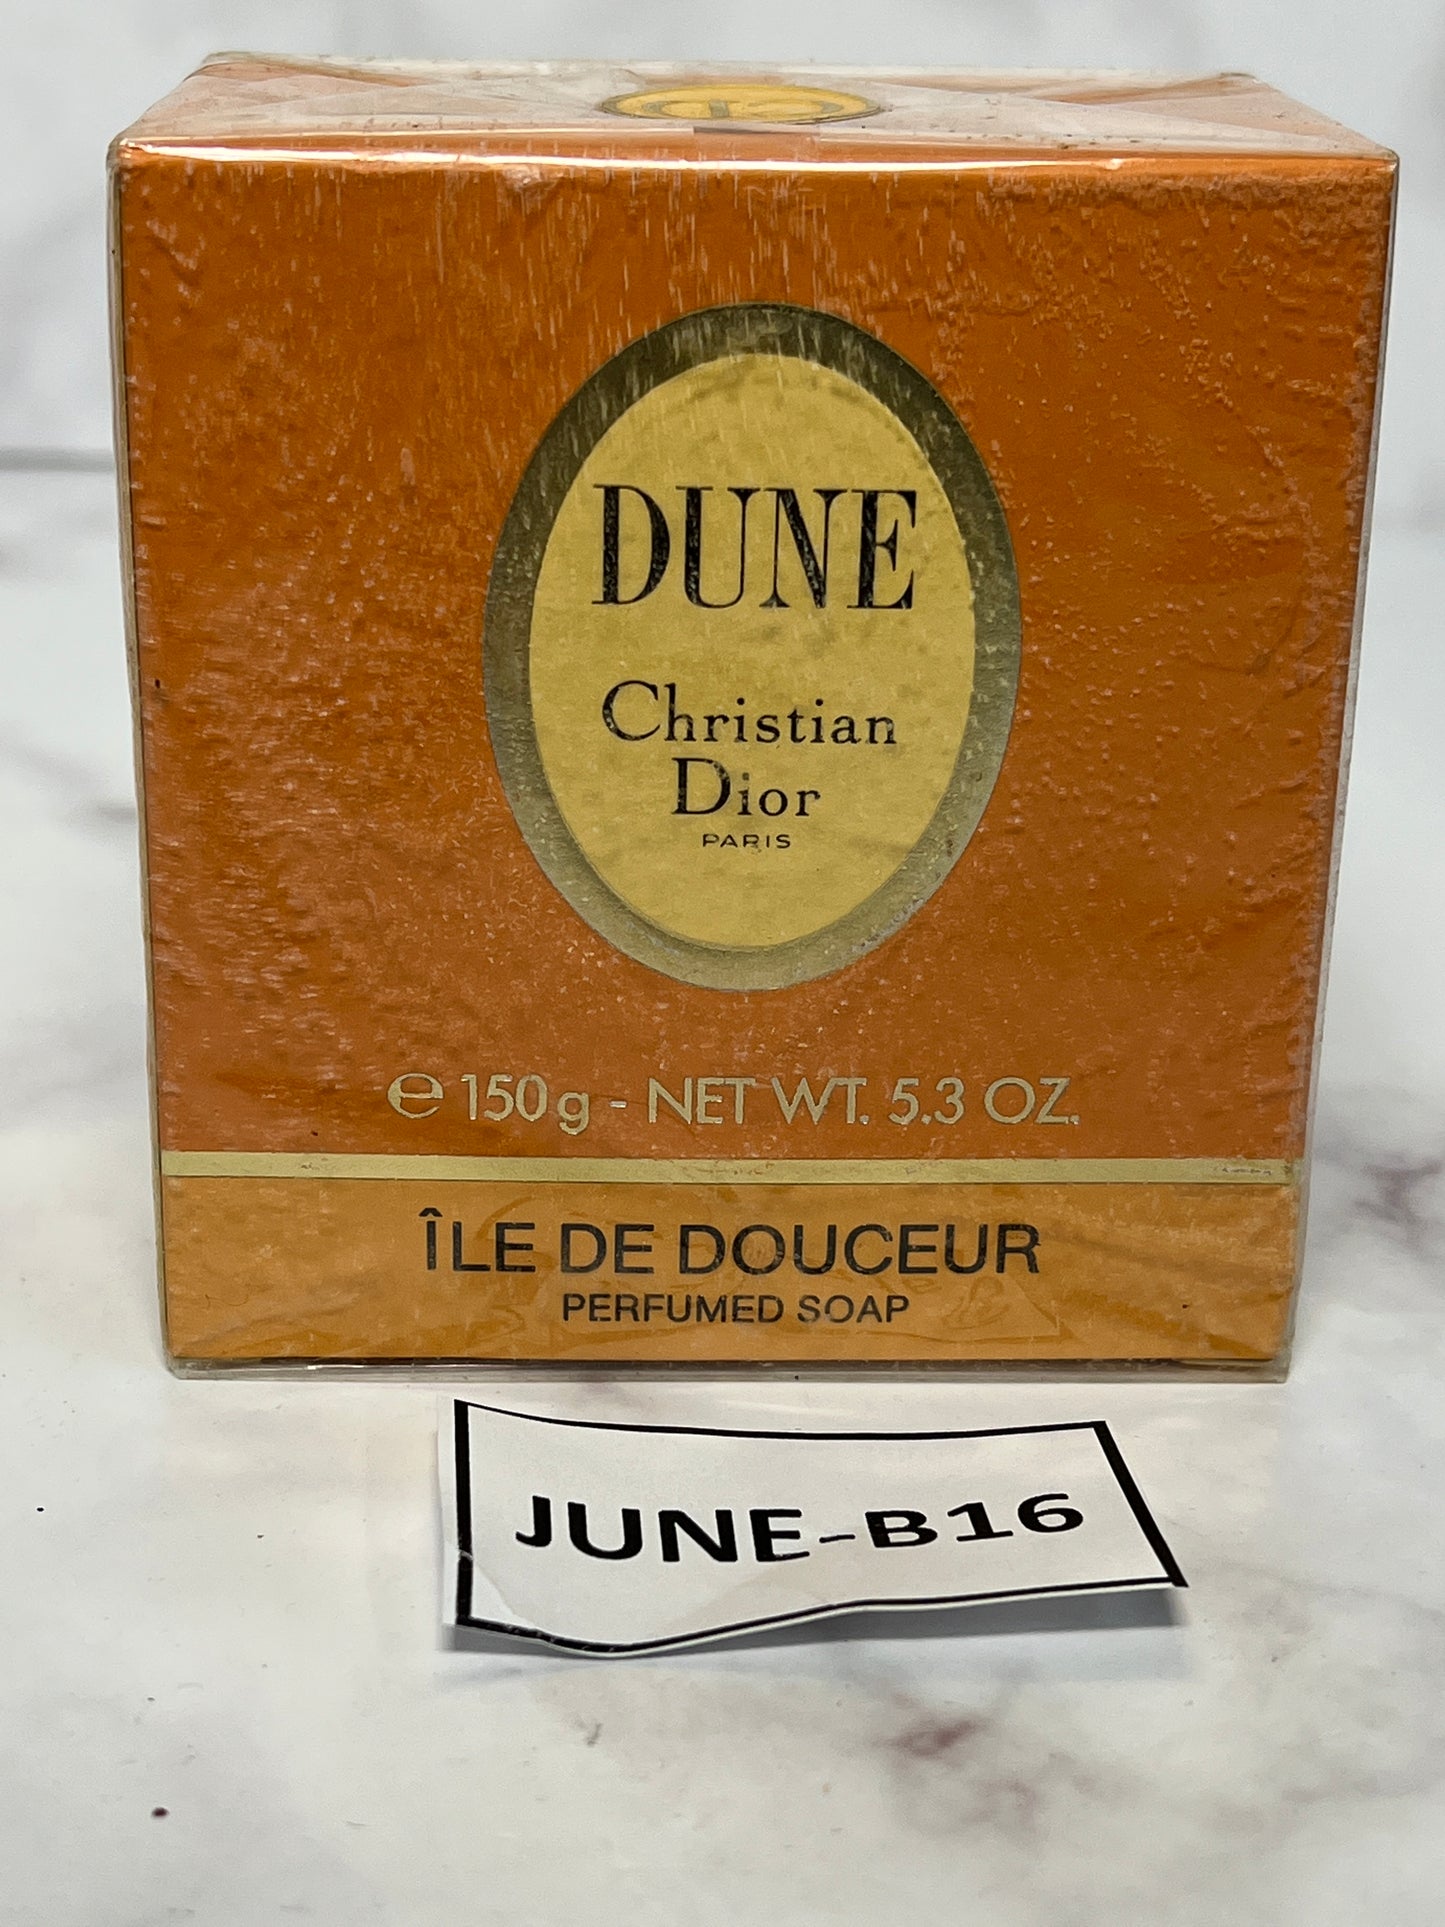 Rare Christian Dior Dune 150g  5.3 oz  Soap Savon Perfume - JUNE B16